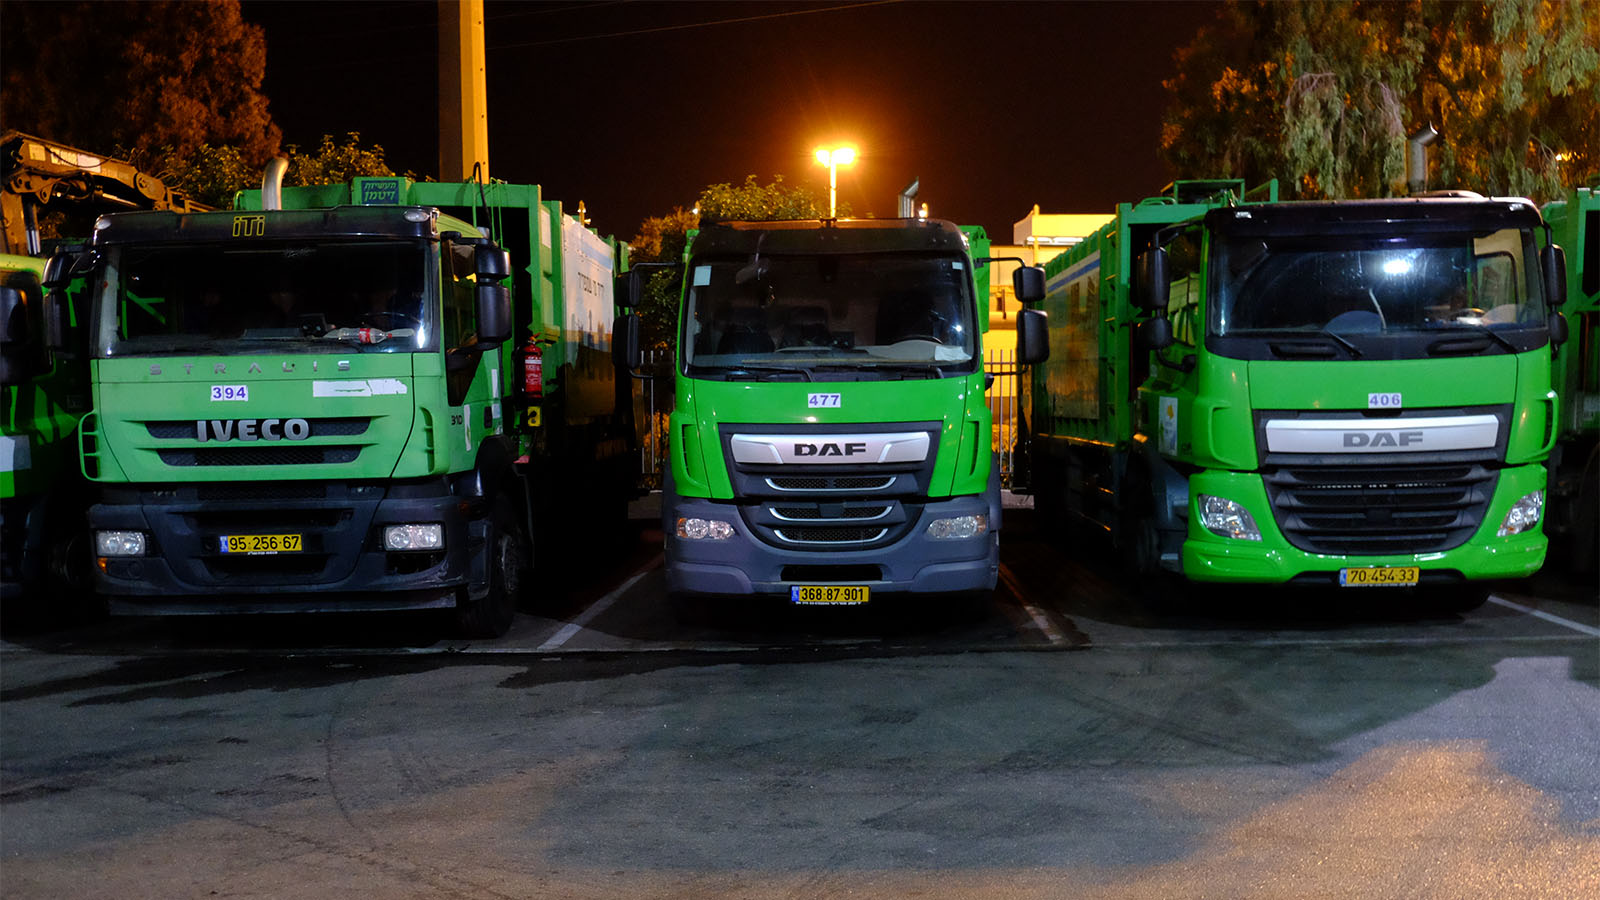 Garbage trucks at Tel Aviv Sanitation Department. Credit: David Twersky